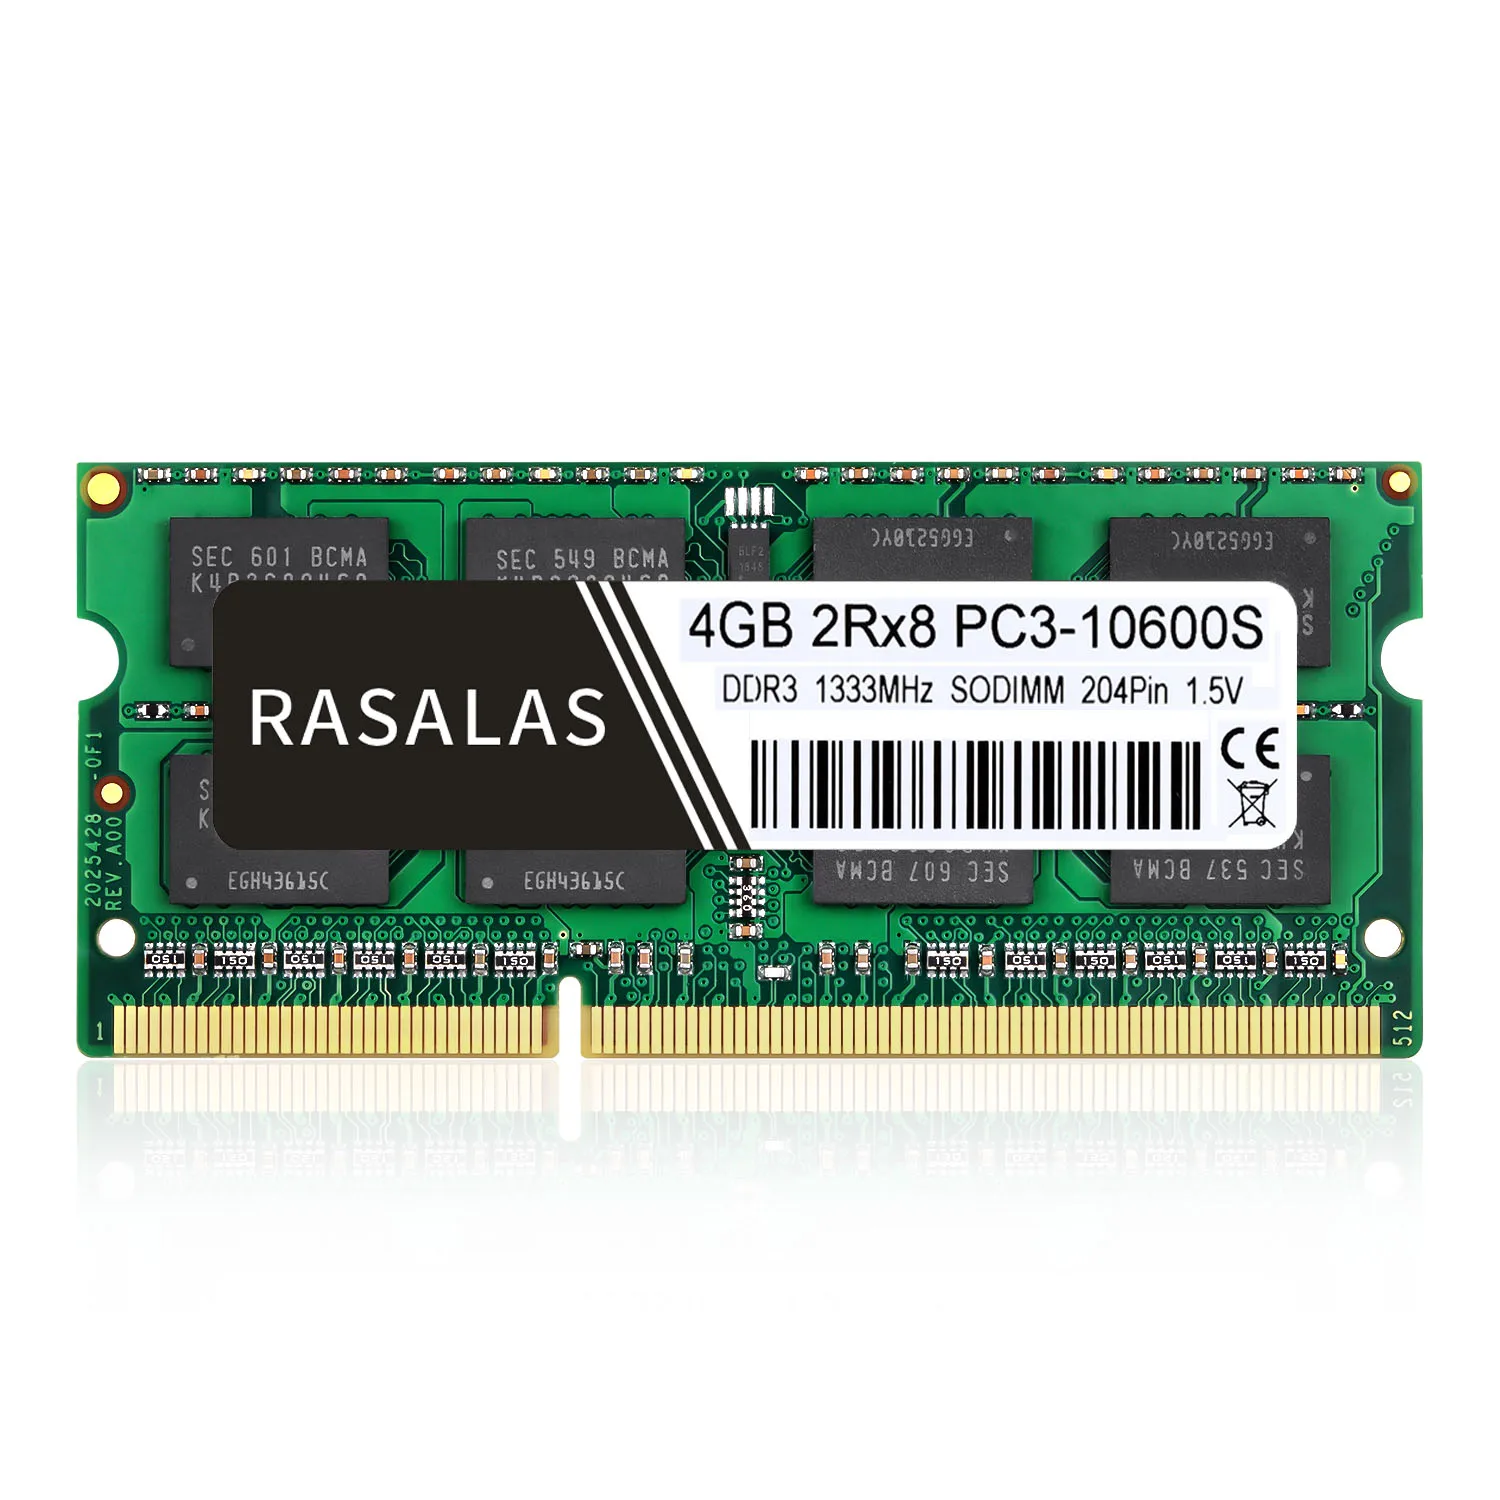 2x Crucial 4GB 2RX8 PC3-8500S DDR3 1066MHz 204pin Laptop SO-DIMM RAM Memory @1H 